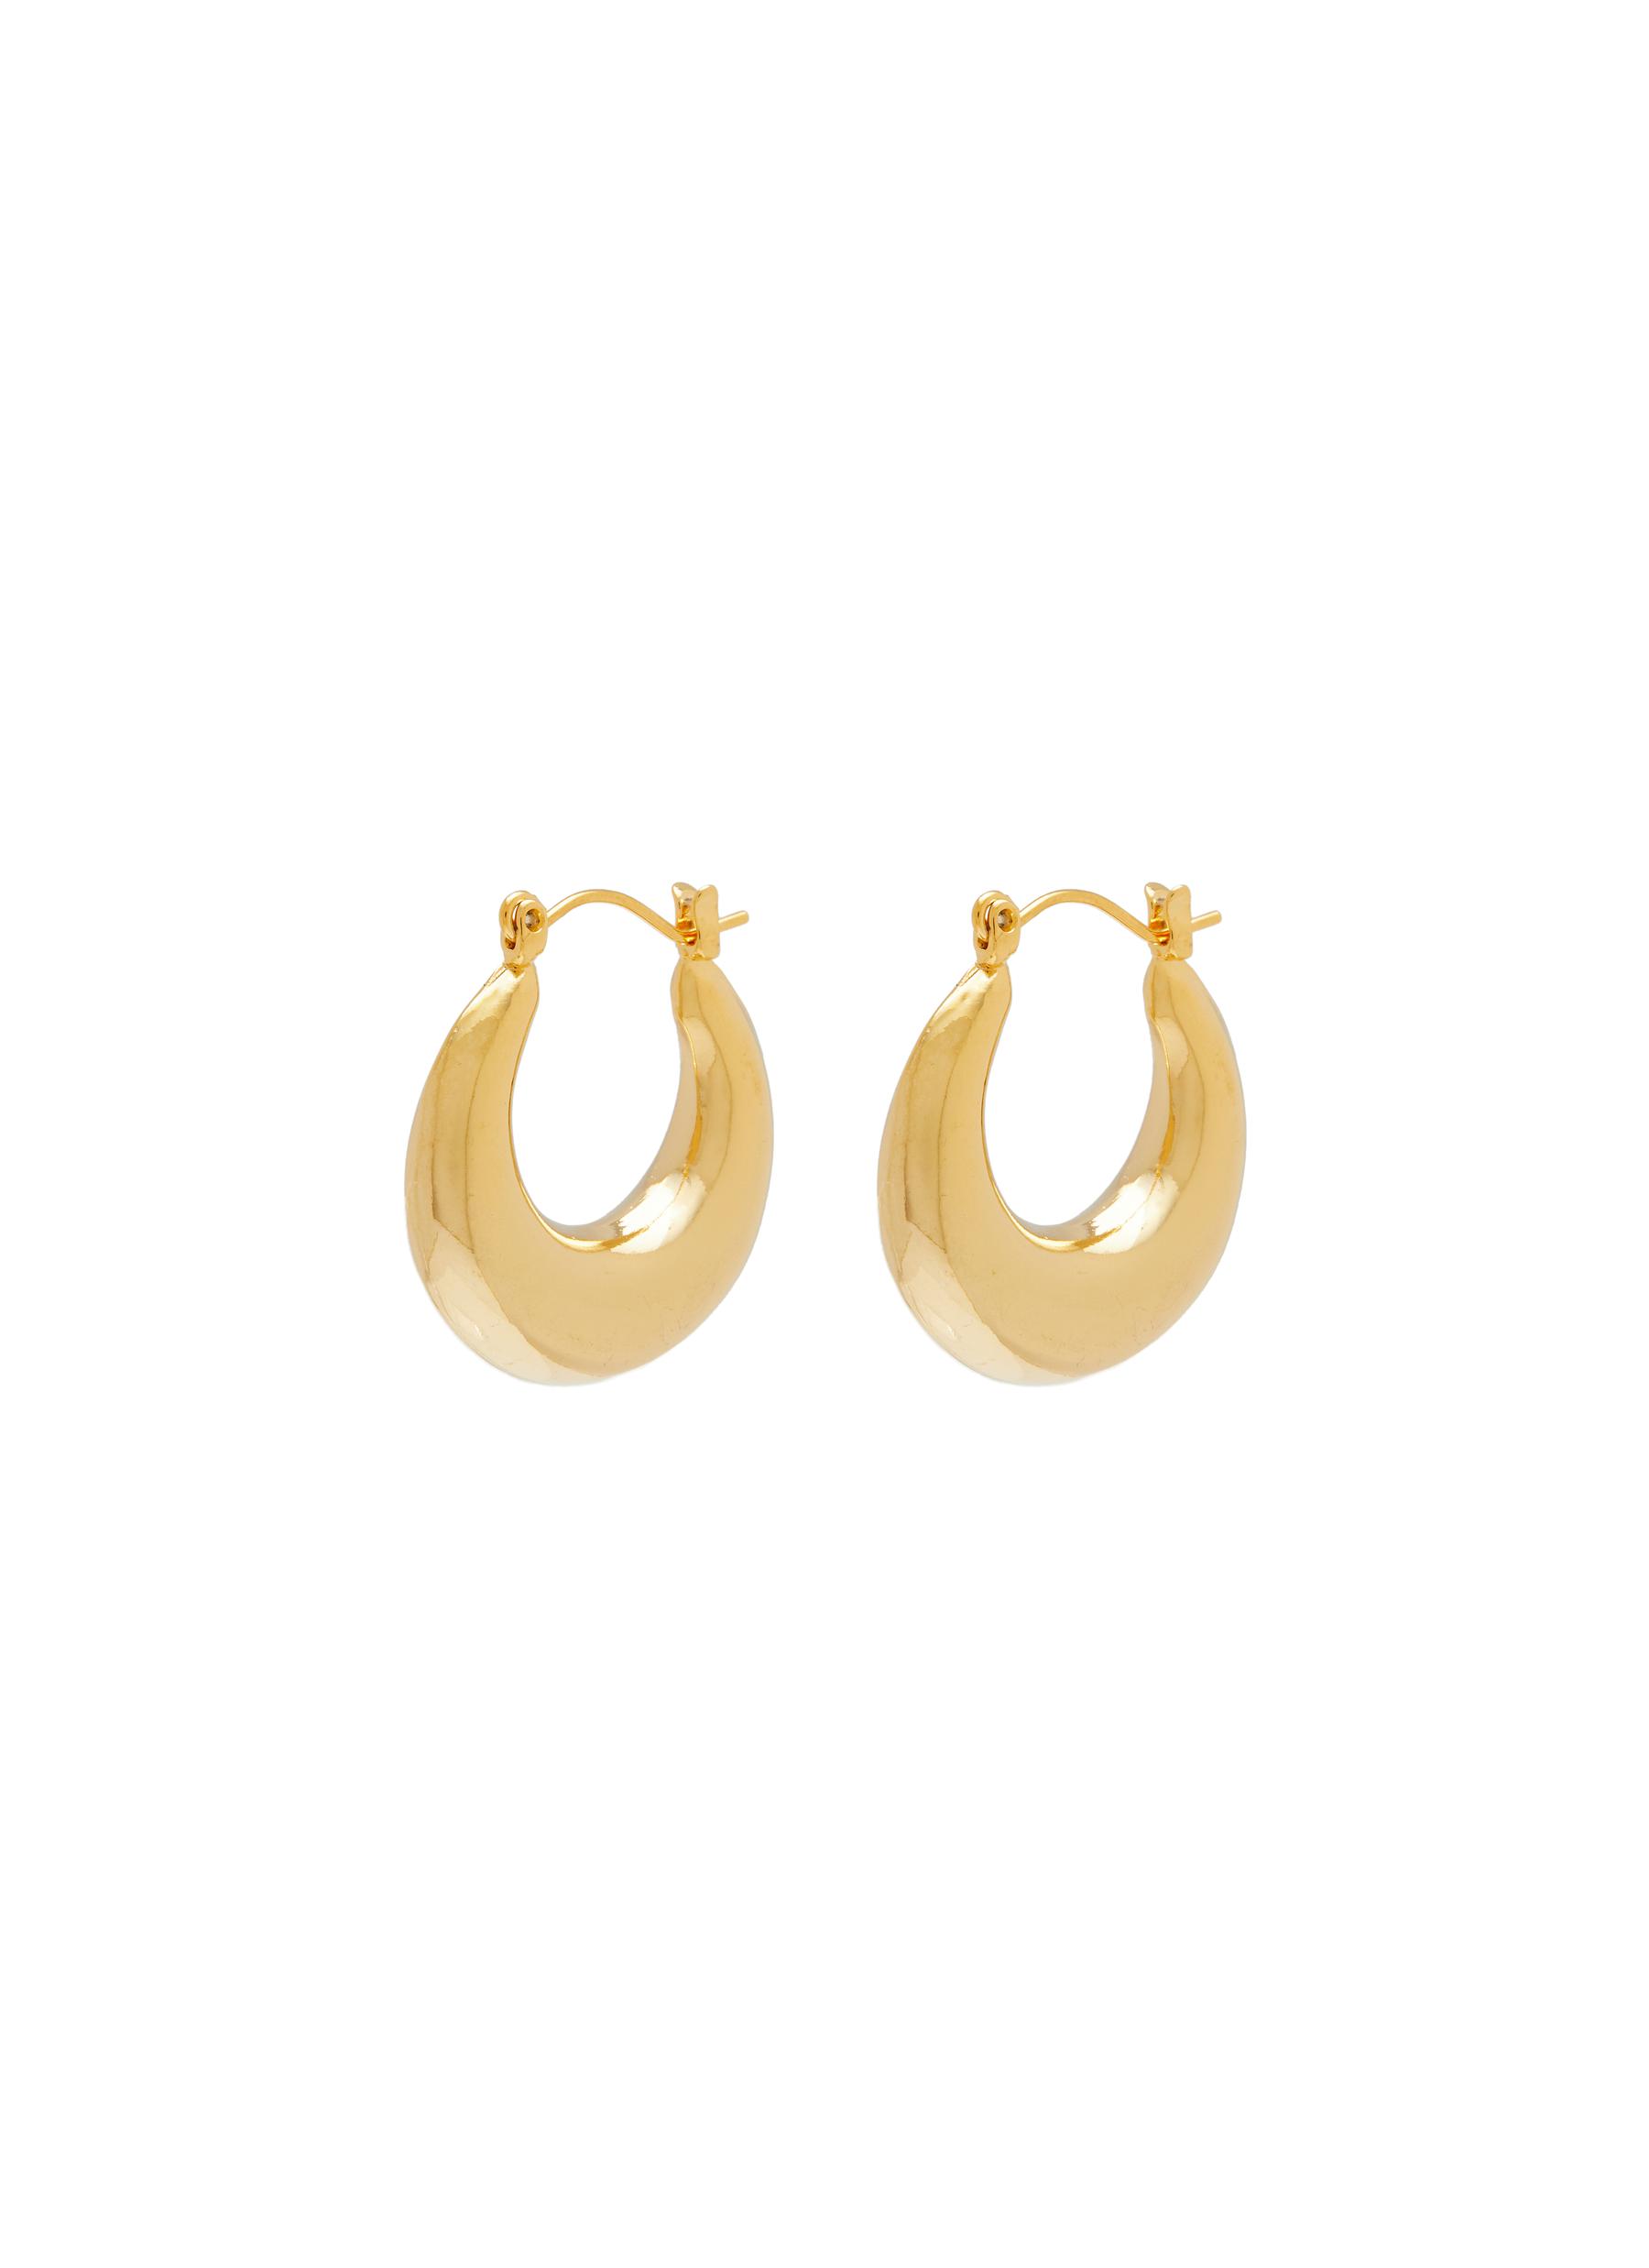 KENNETH JAY LANE Polished Gold Toned Metal Hoop Earrings